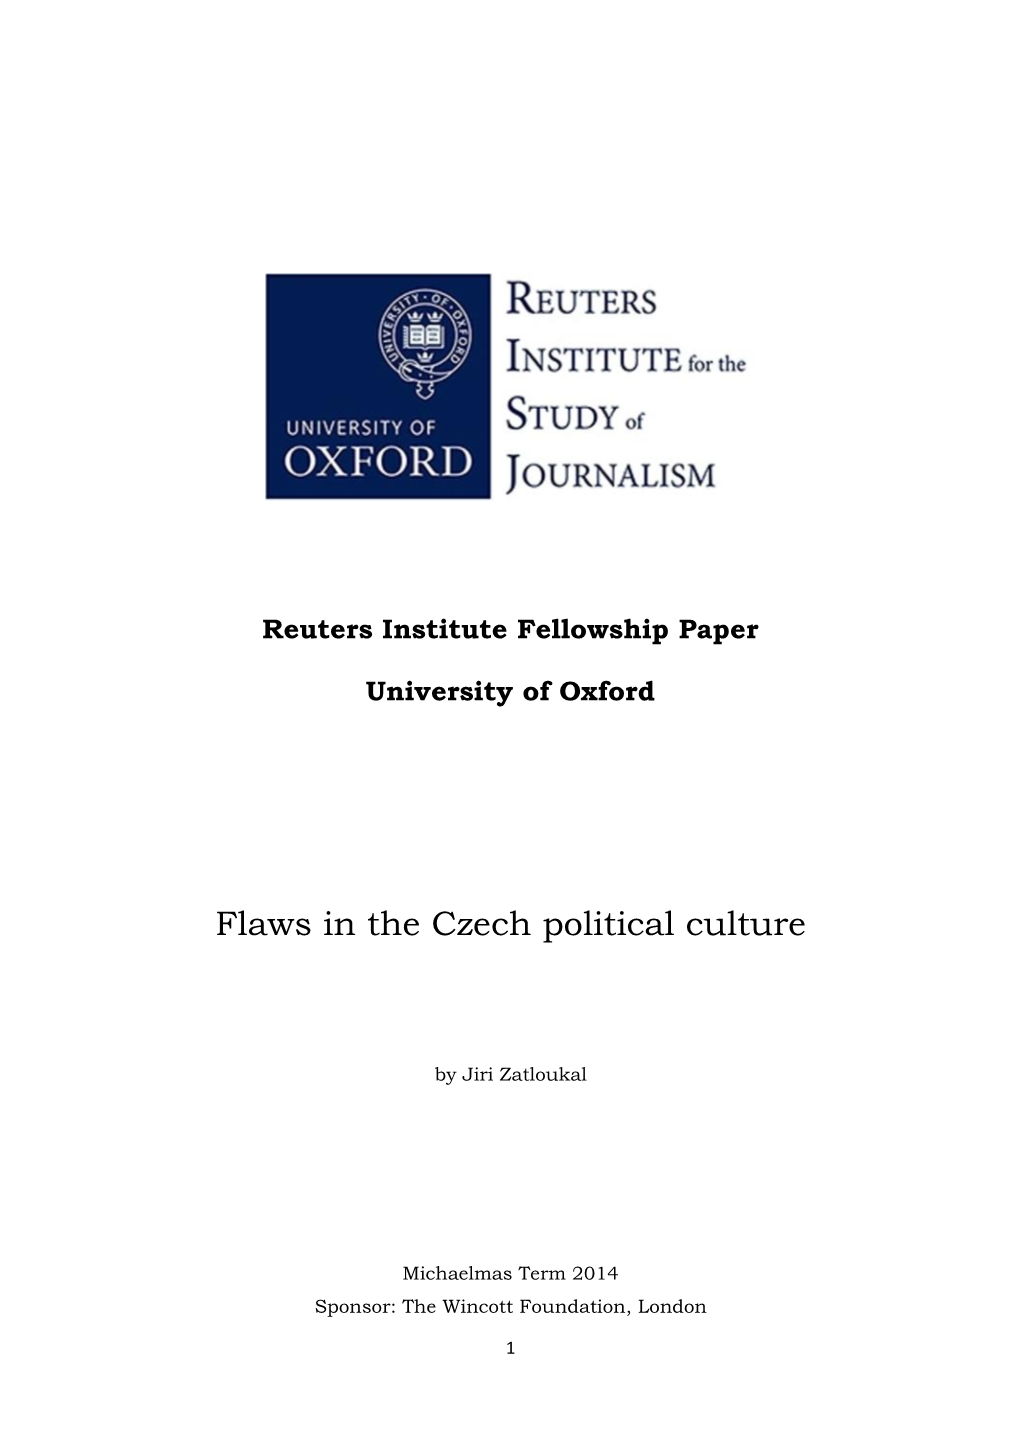 Flaws in the Czech Political Culture